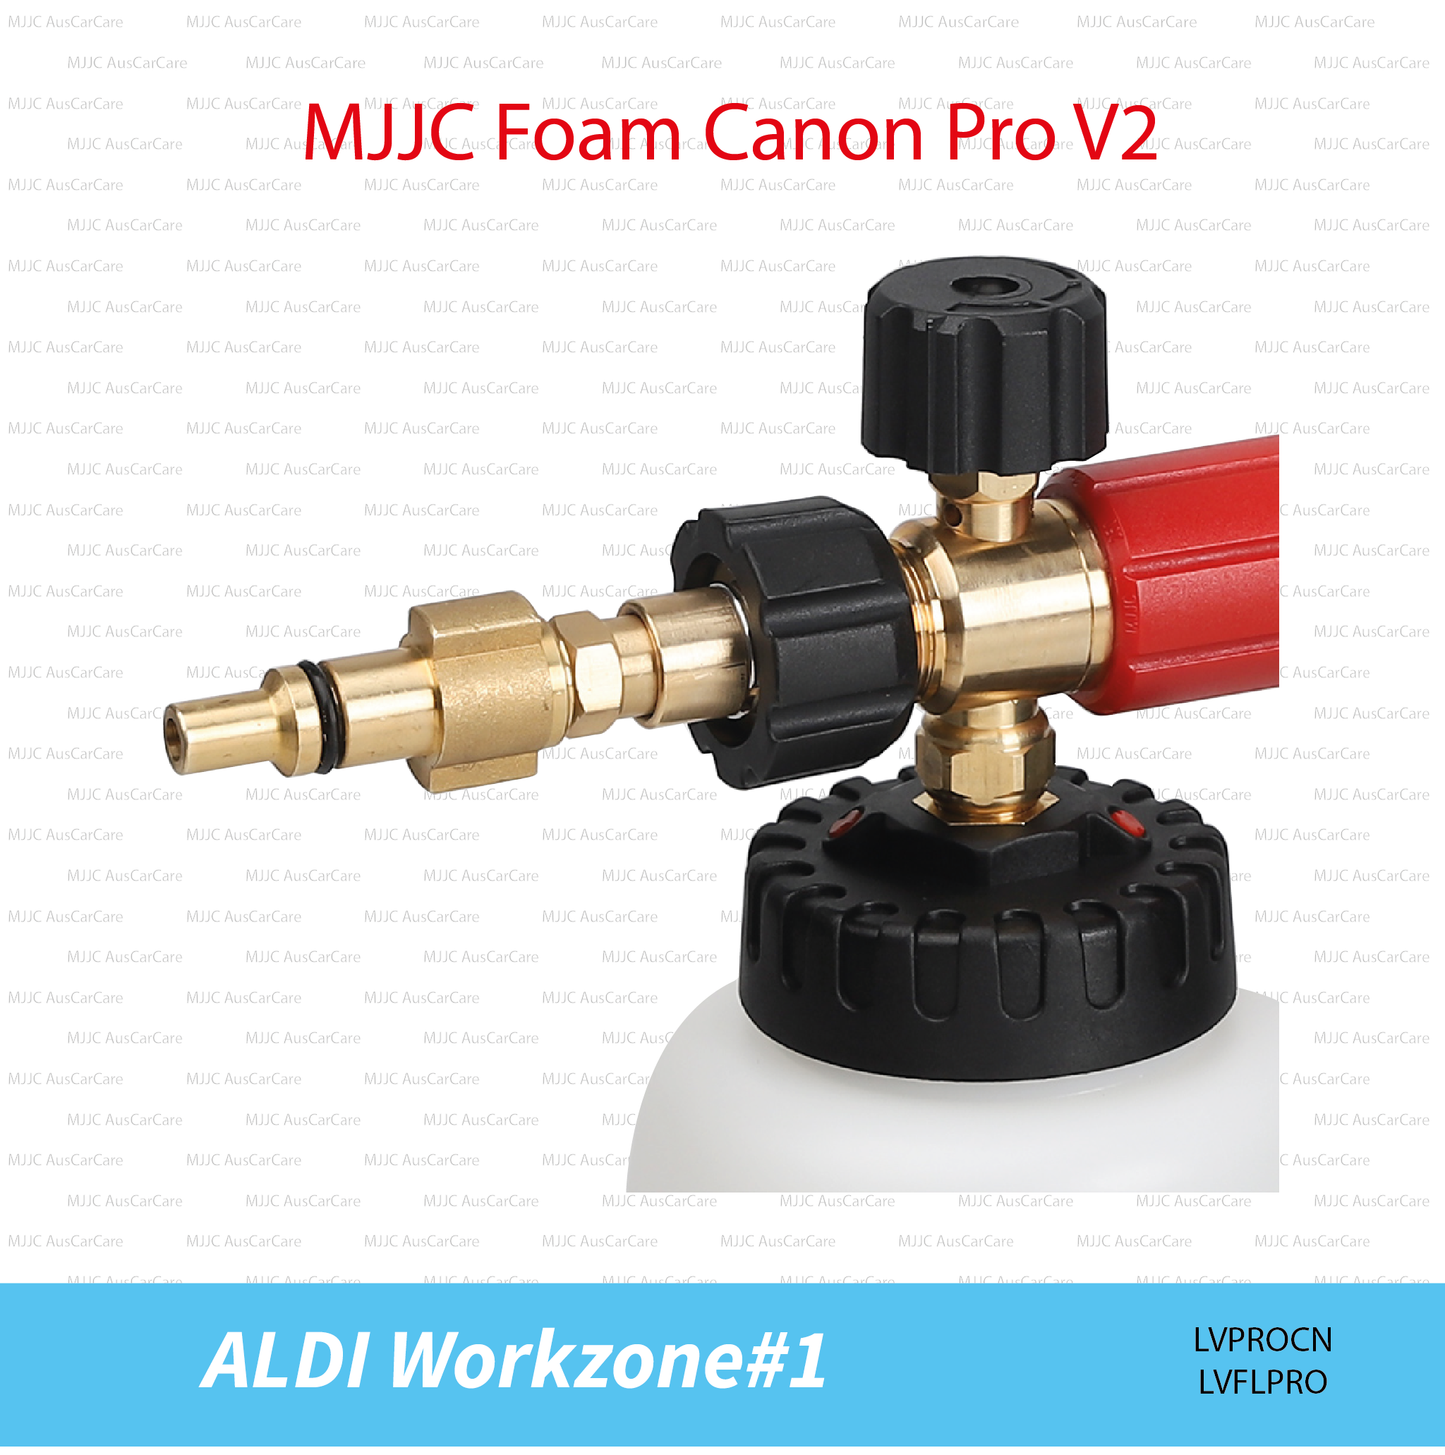 Aldi Workzone#1 (LVPROCN) Adapter for MJJC Foam Cannon Pro V2 (LVFLPRO)